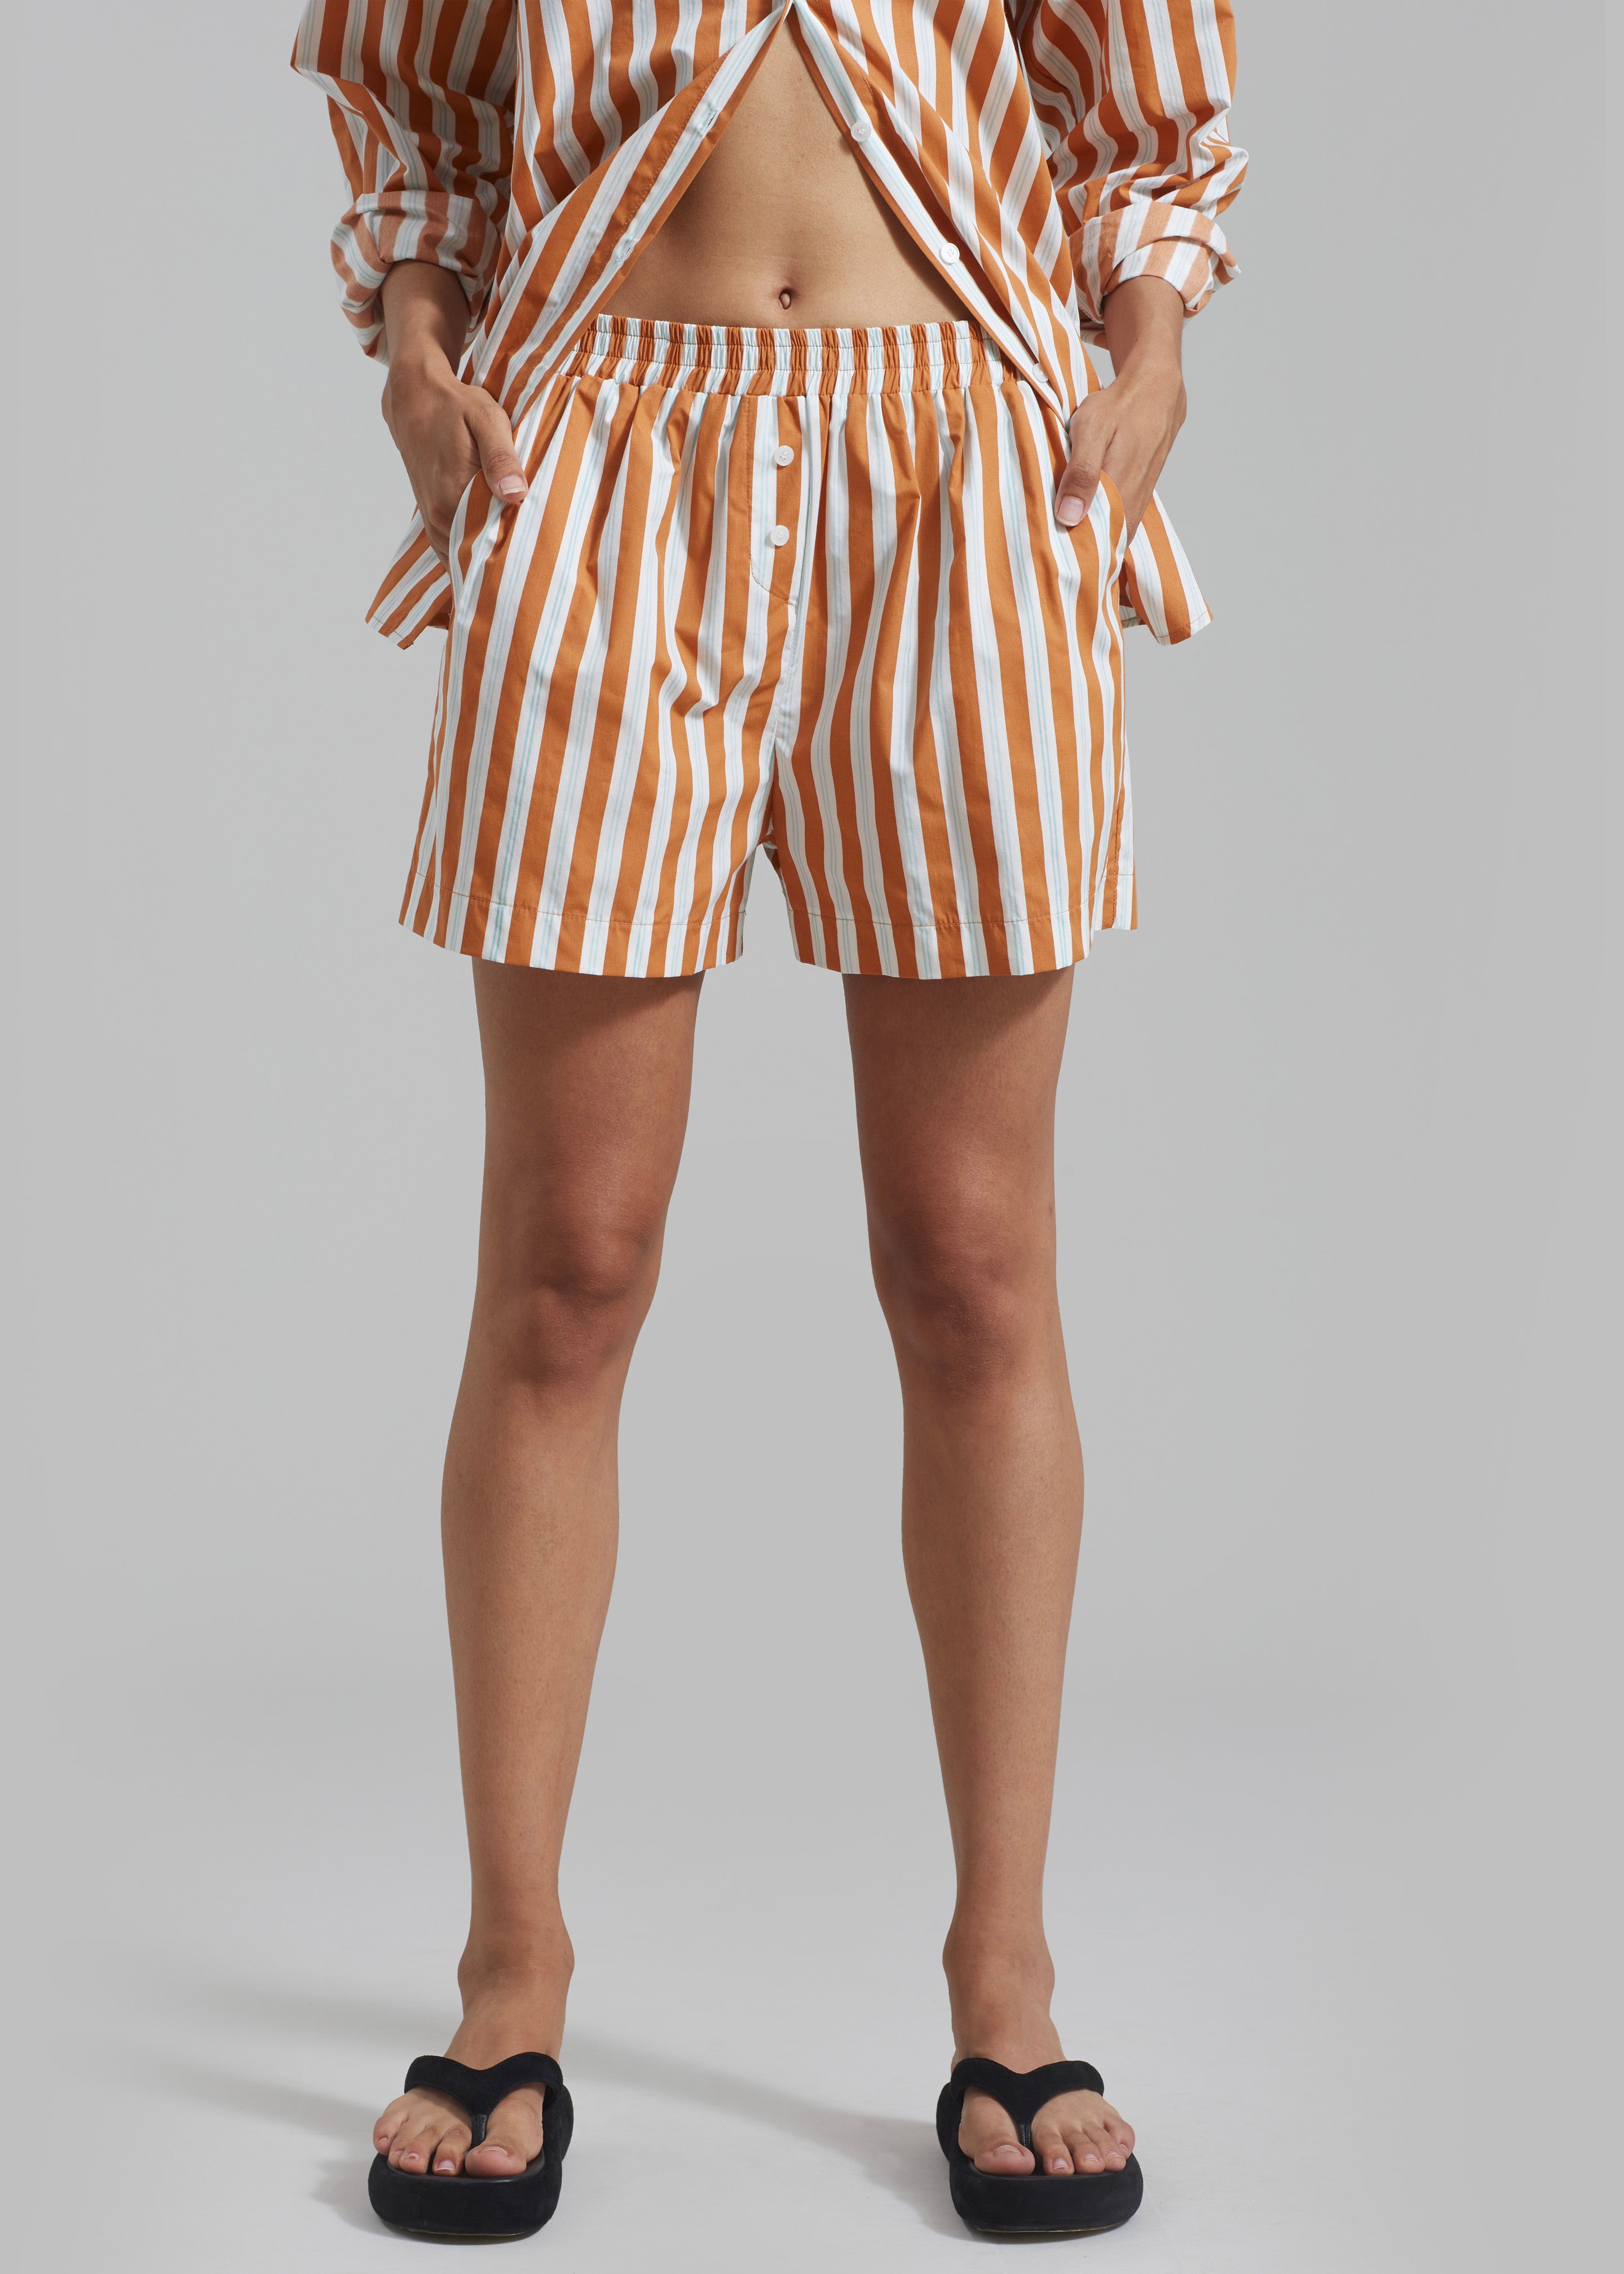 Juno Boxer Shorts - Orange Stripe - 4